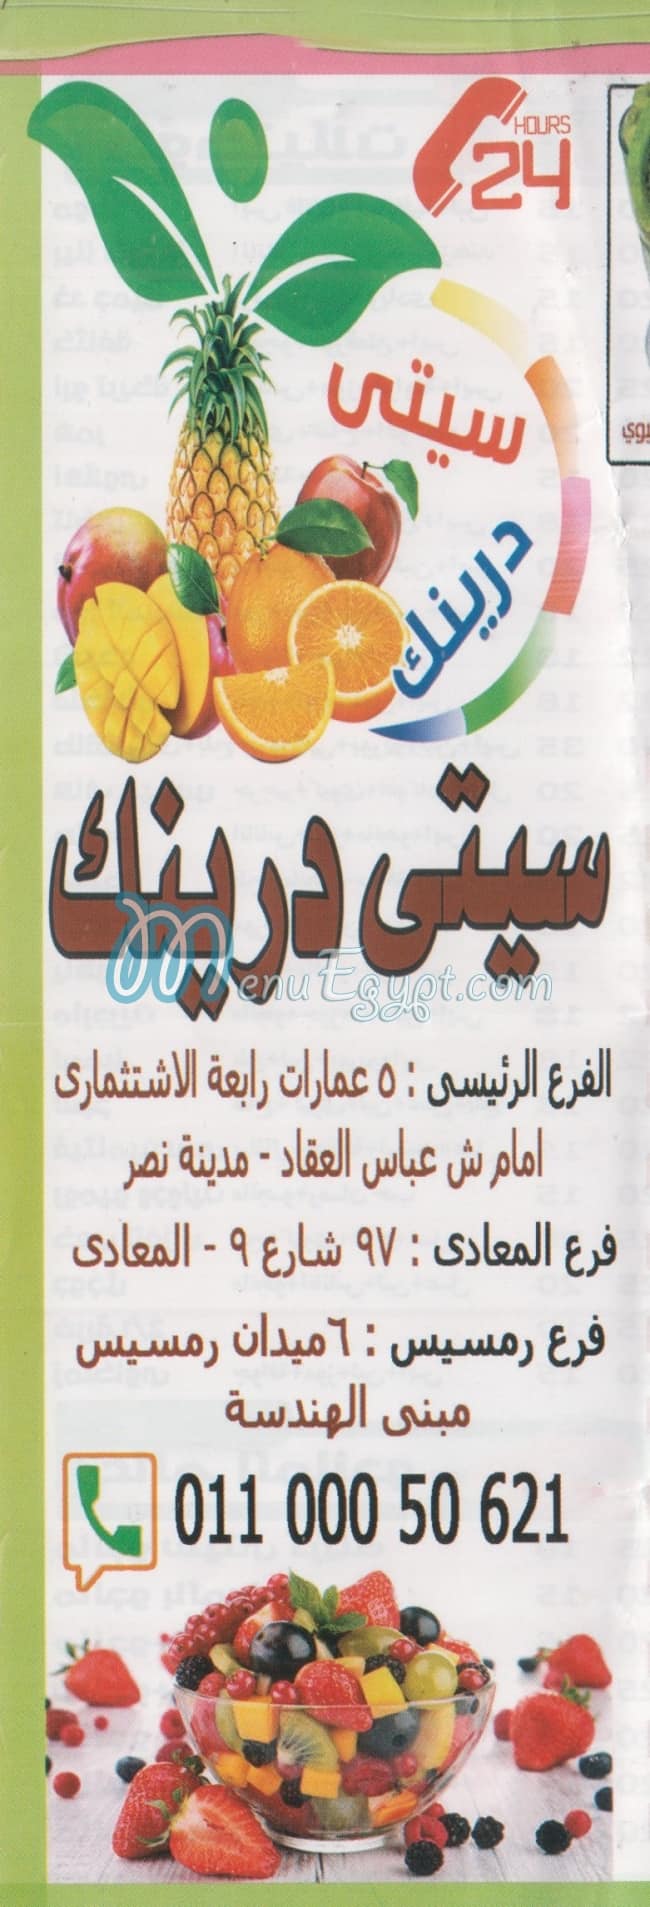 3asaer City drink menu